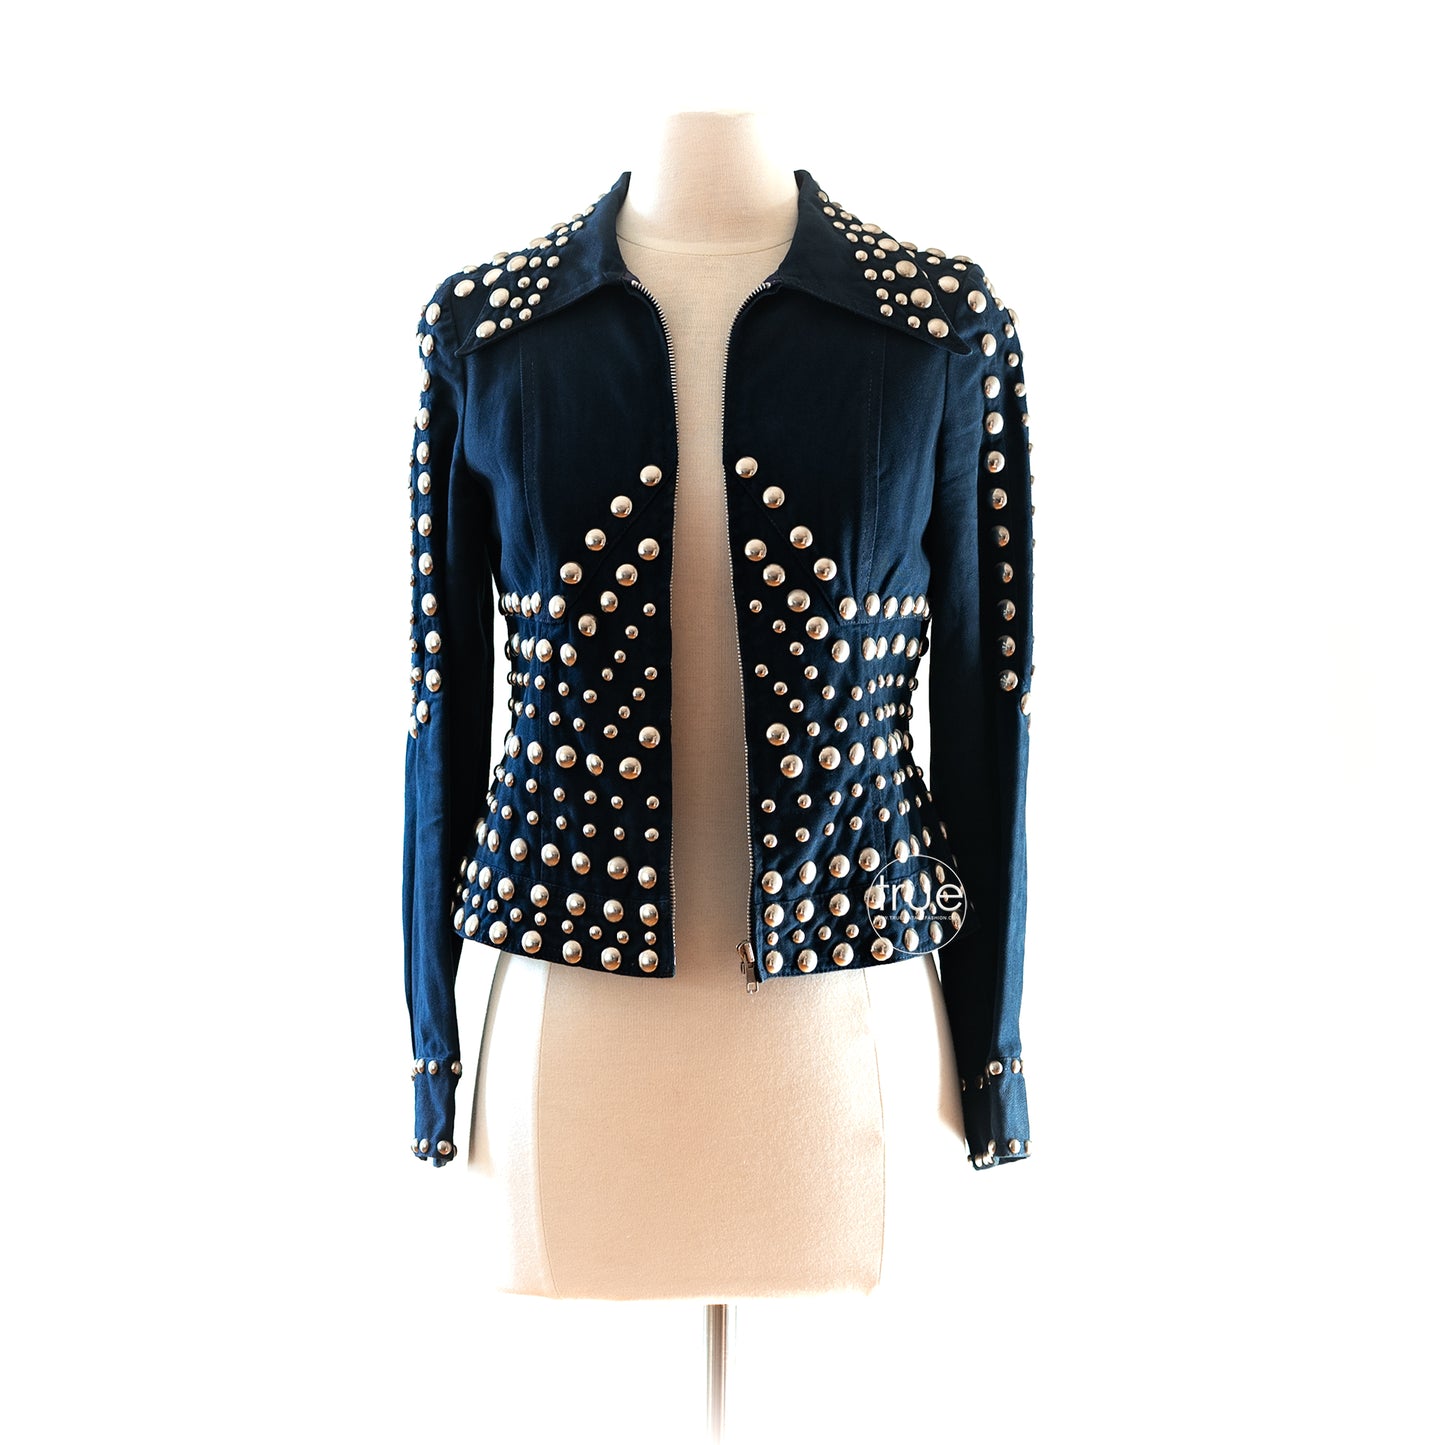 vintage 1960's jacket ...rockstar dream RONCELLI navy blue denim heavily metal studded jacket